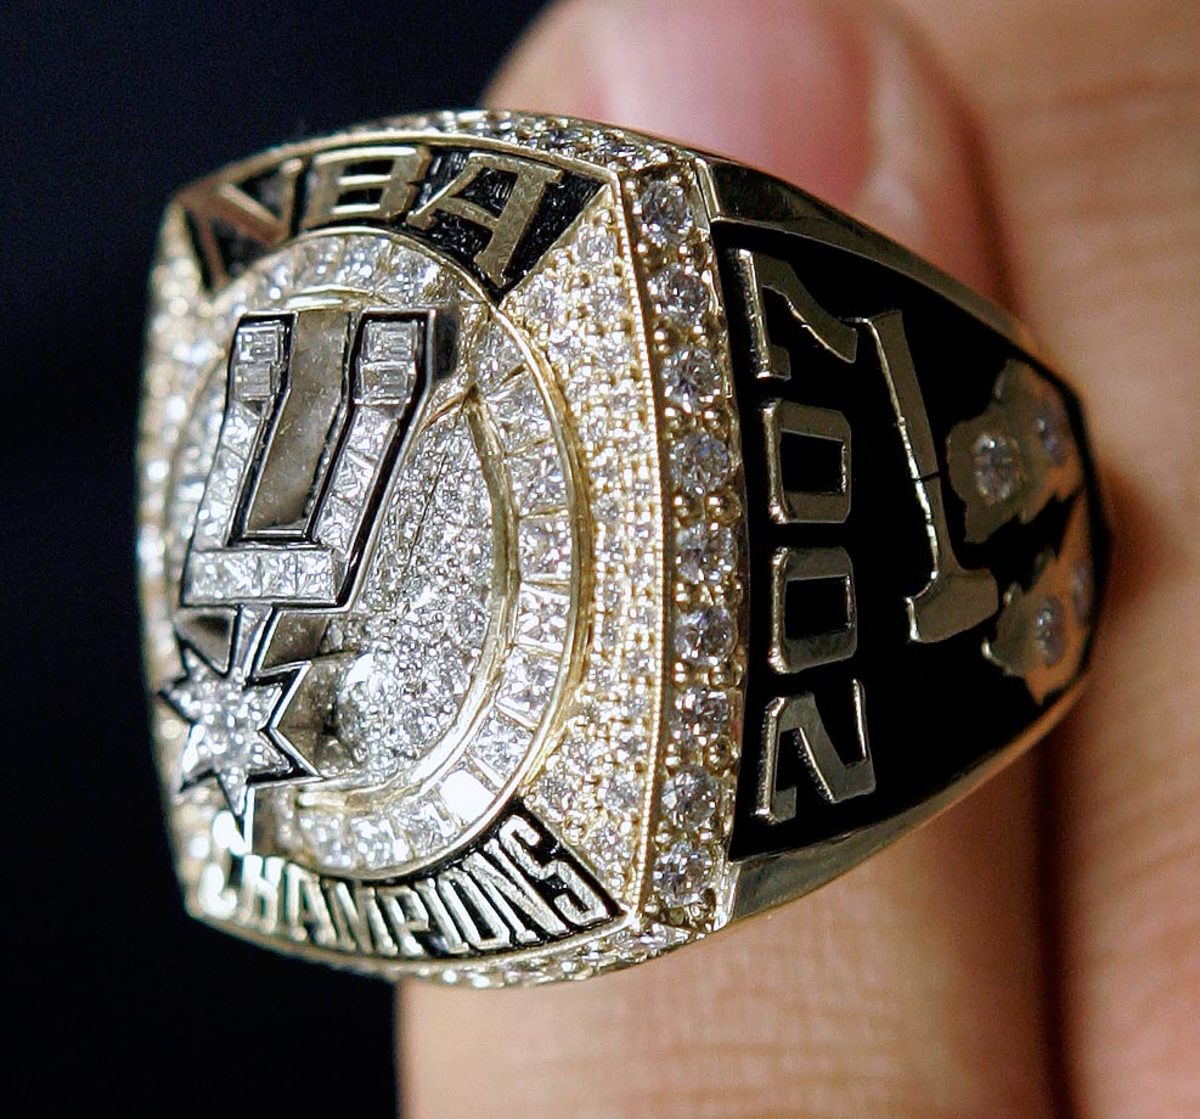 Penn State alum wins NBA Championship ring